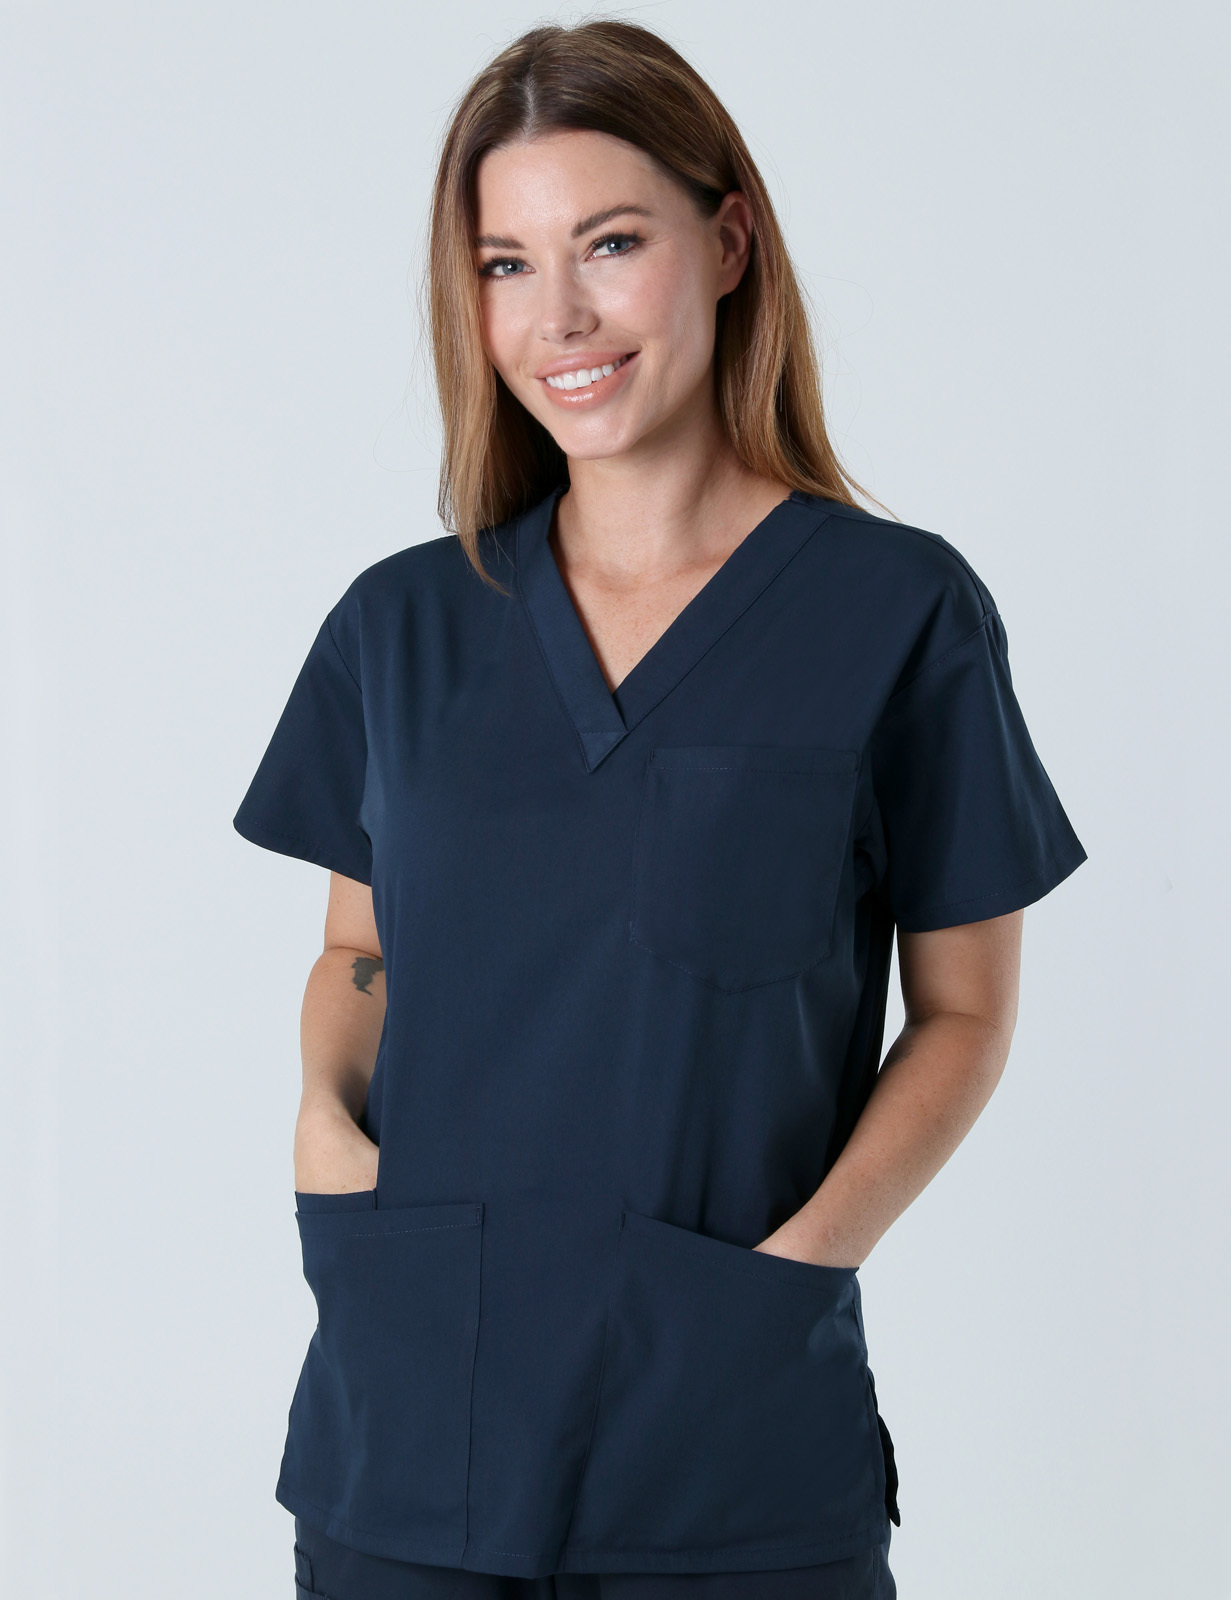 Monash Health Newborn Nurse Practitioner Uniform Set Bundle (4 Pocket Top and Cargo Pants in Navy + Logo)